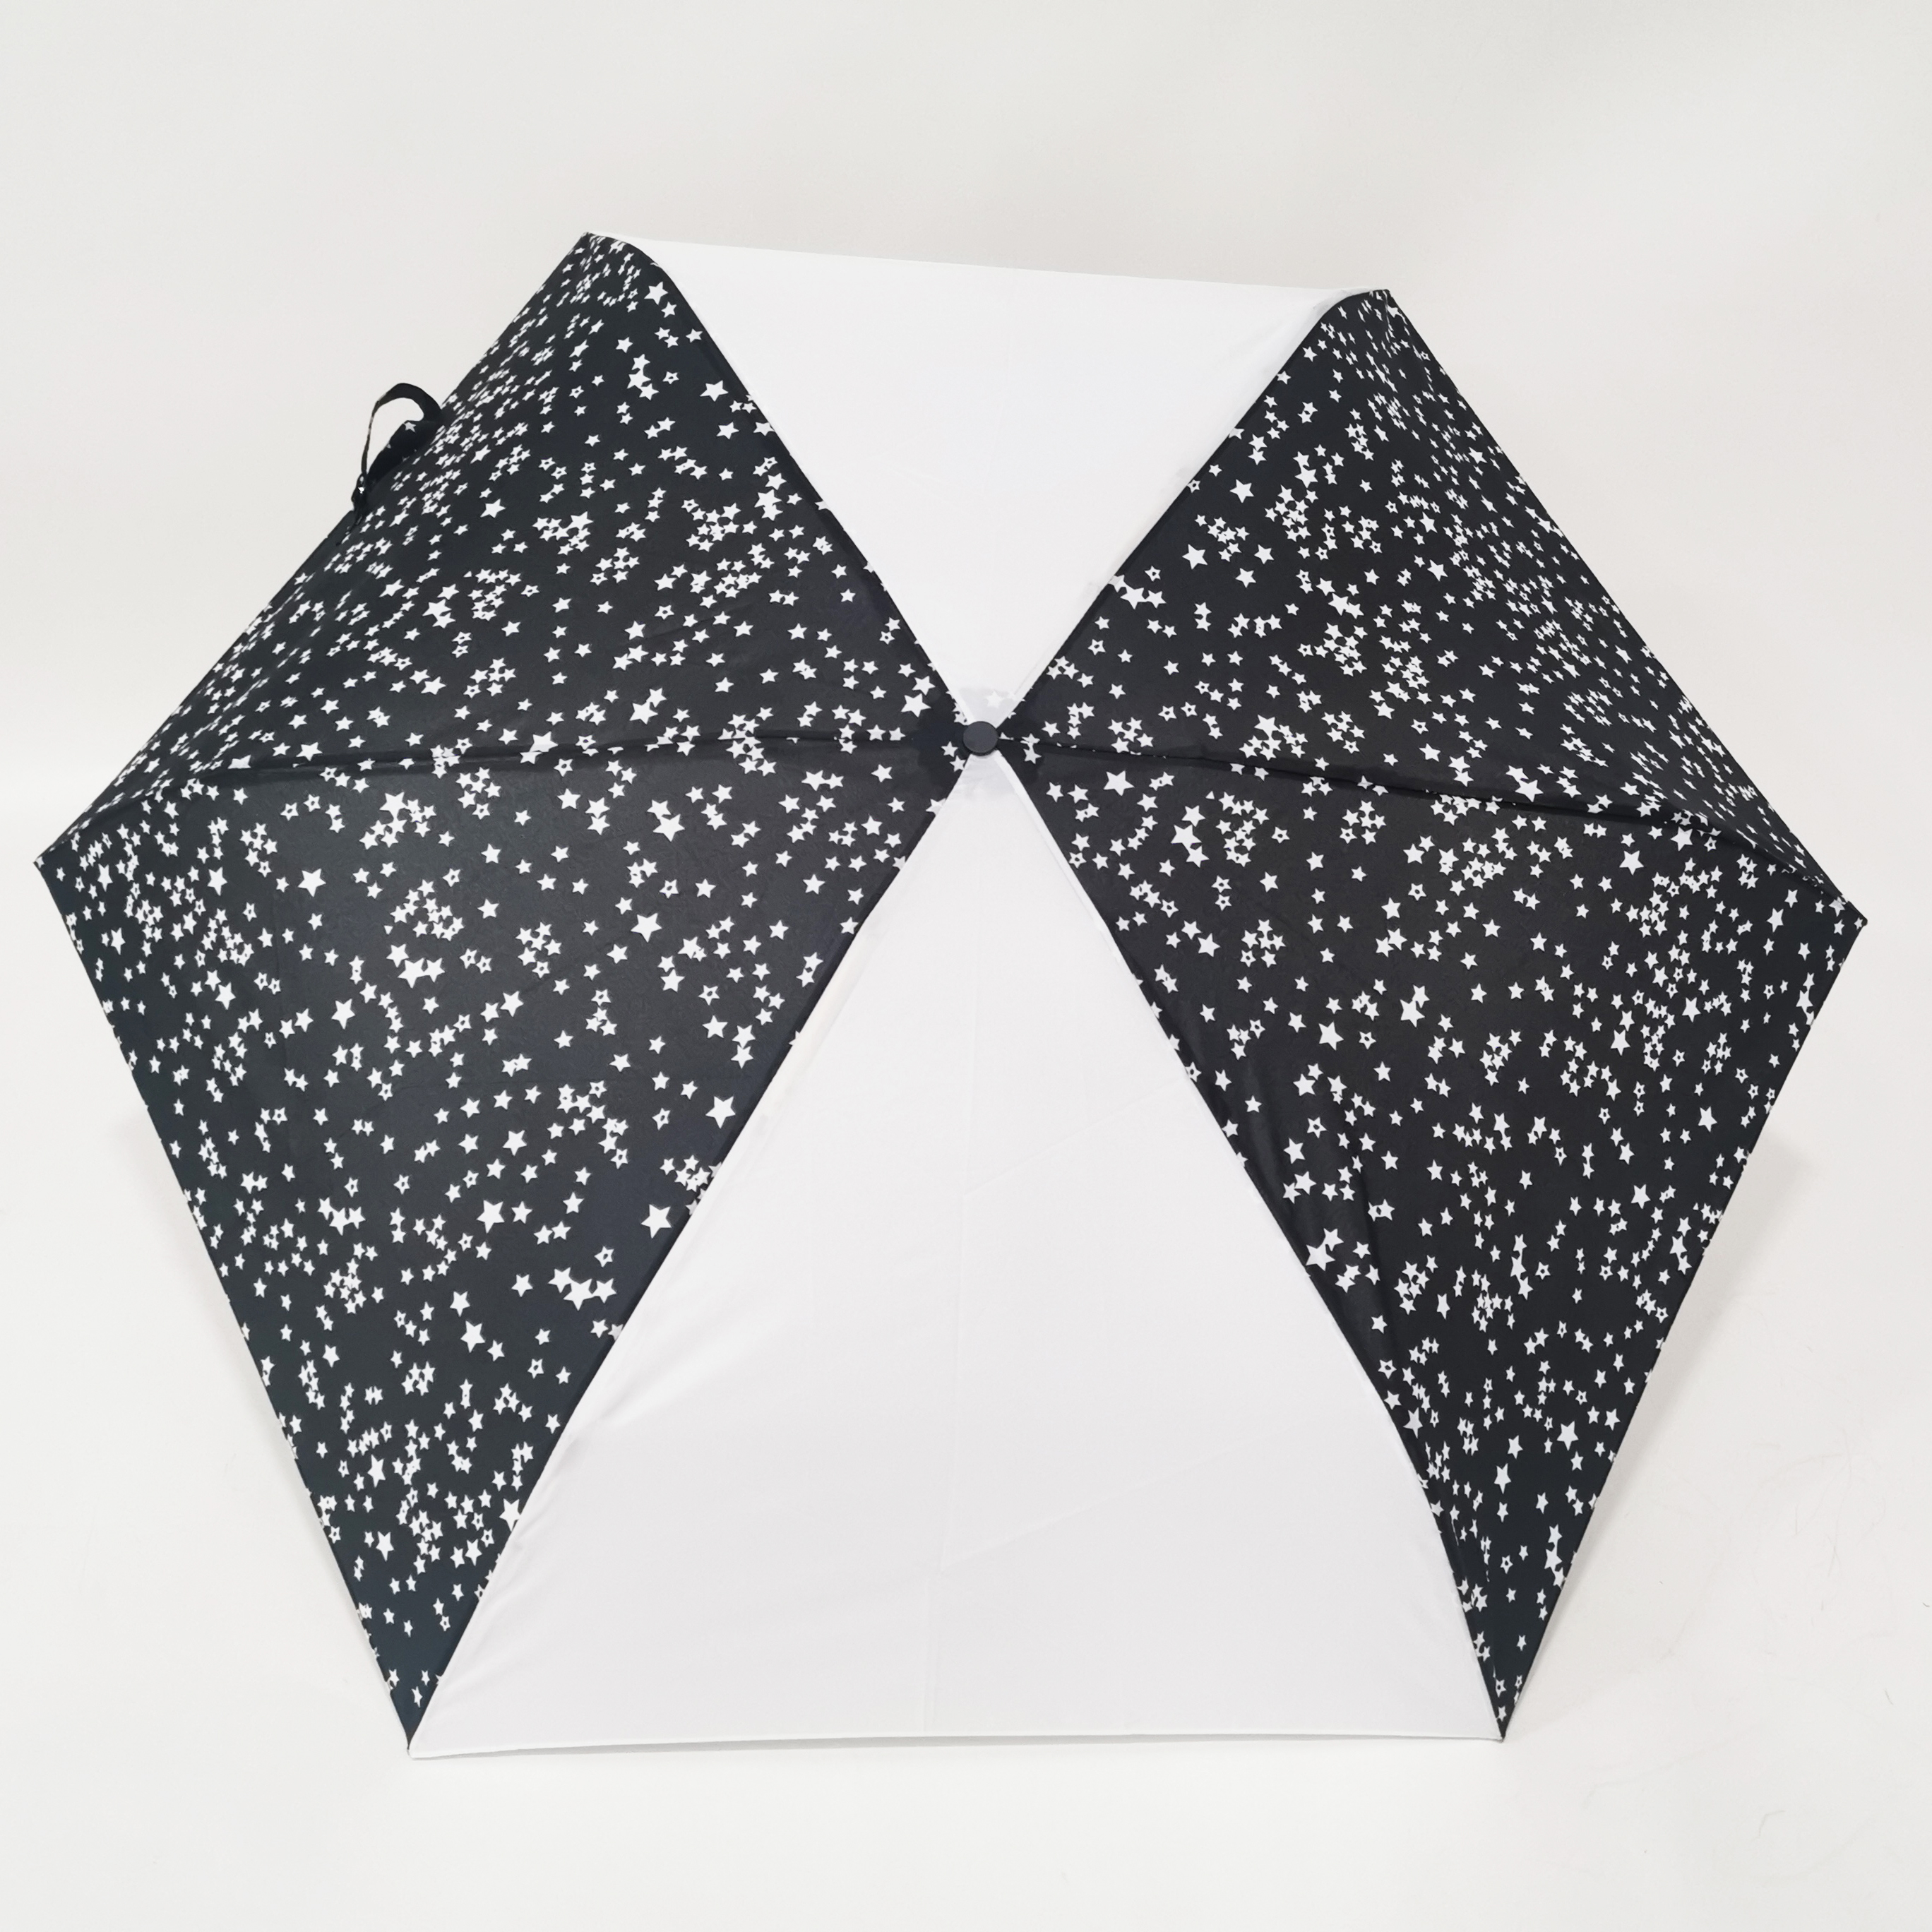 https://www.hodaumbrella.com/just-205g-an-three-folding-umbrella-product/